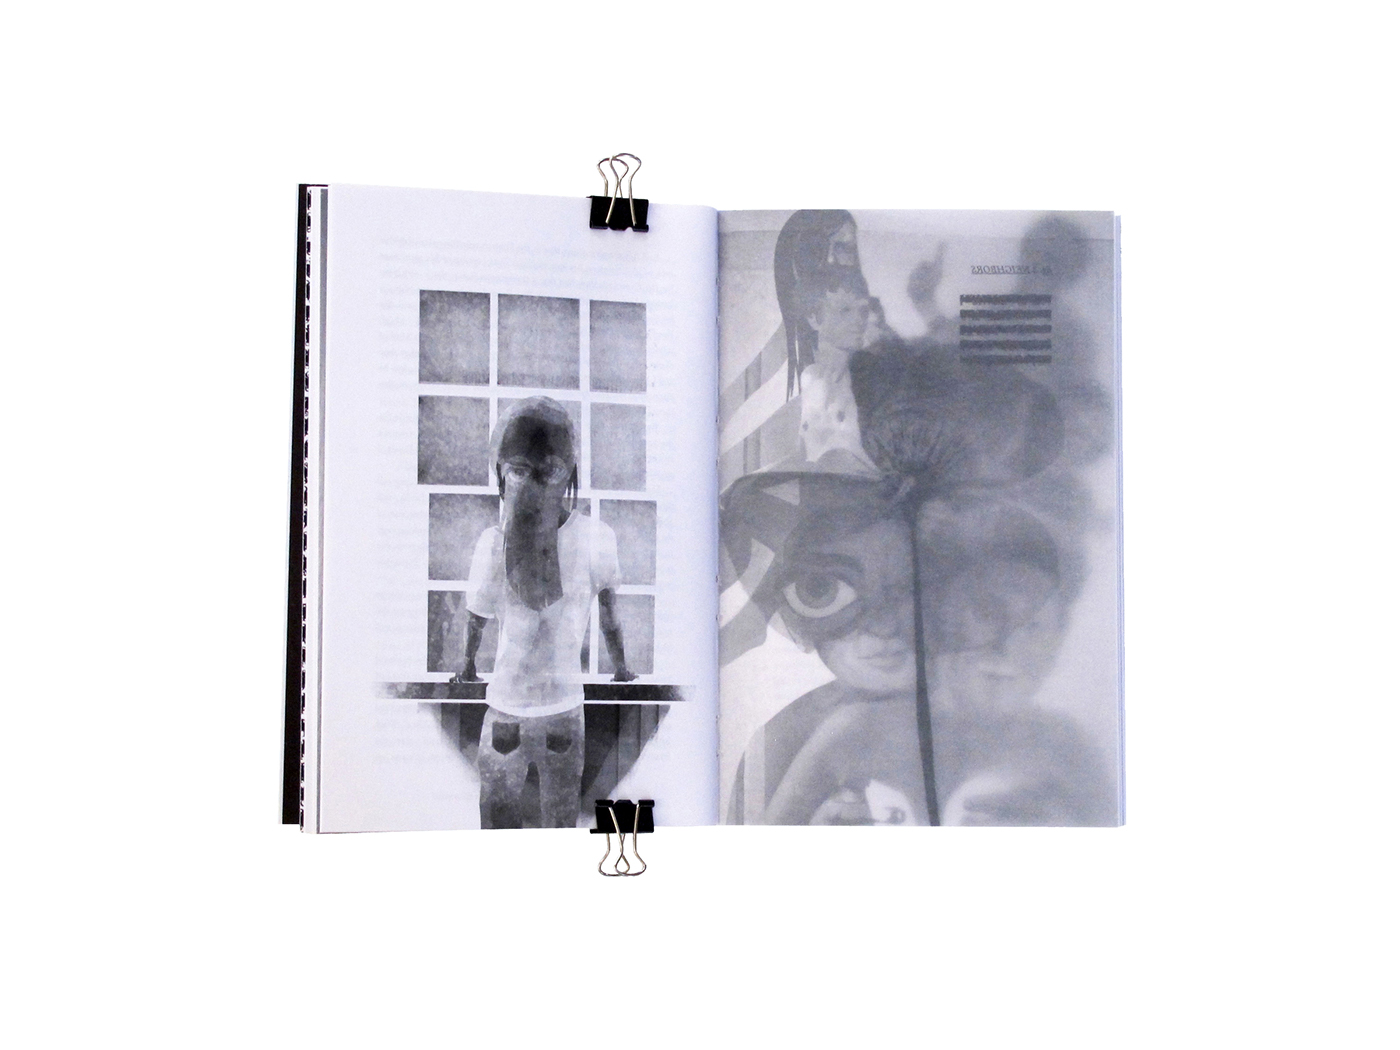 book Selfpublishing digitalart compart graphicdesign Flowers Relationships youth comingofage Eastcoast